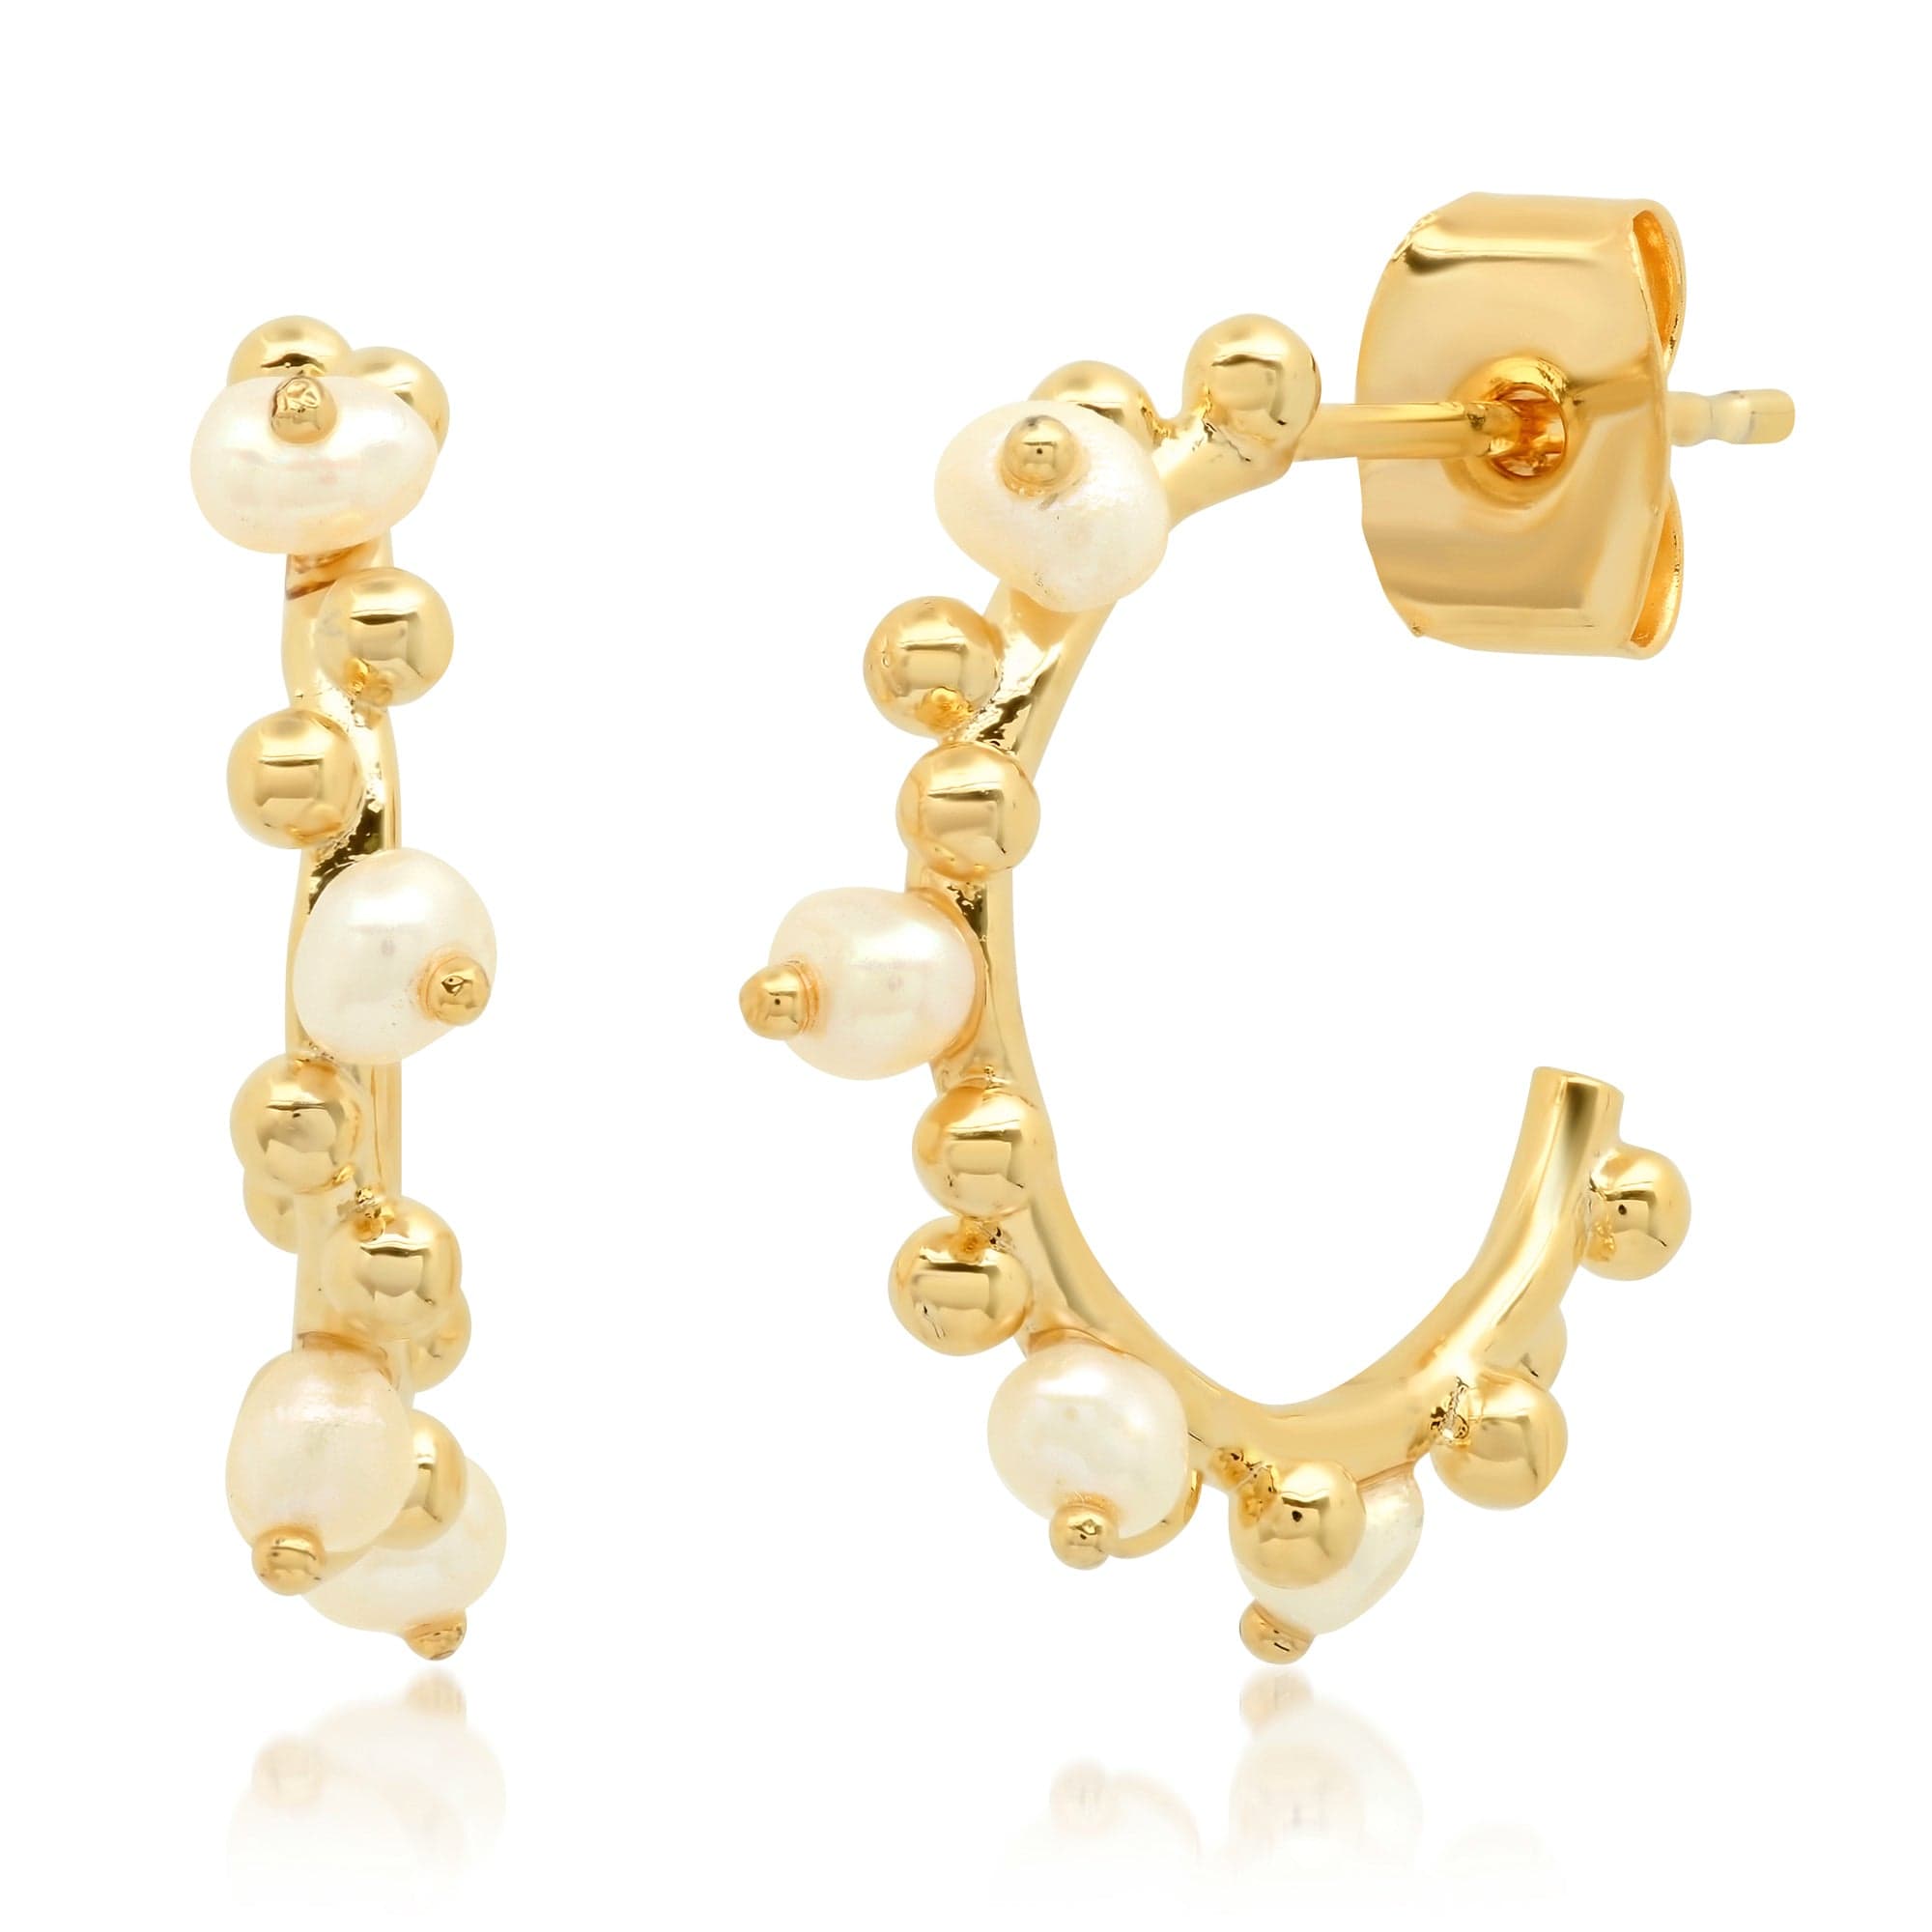 TAI JEWELRY Earrings Pearl And Gold Ball Mini Hoop